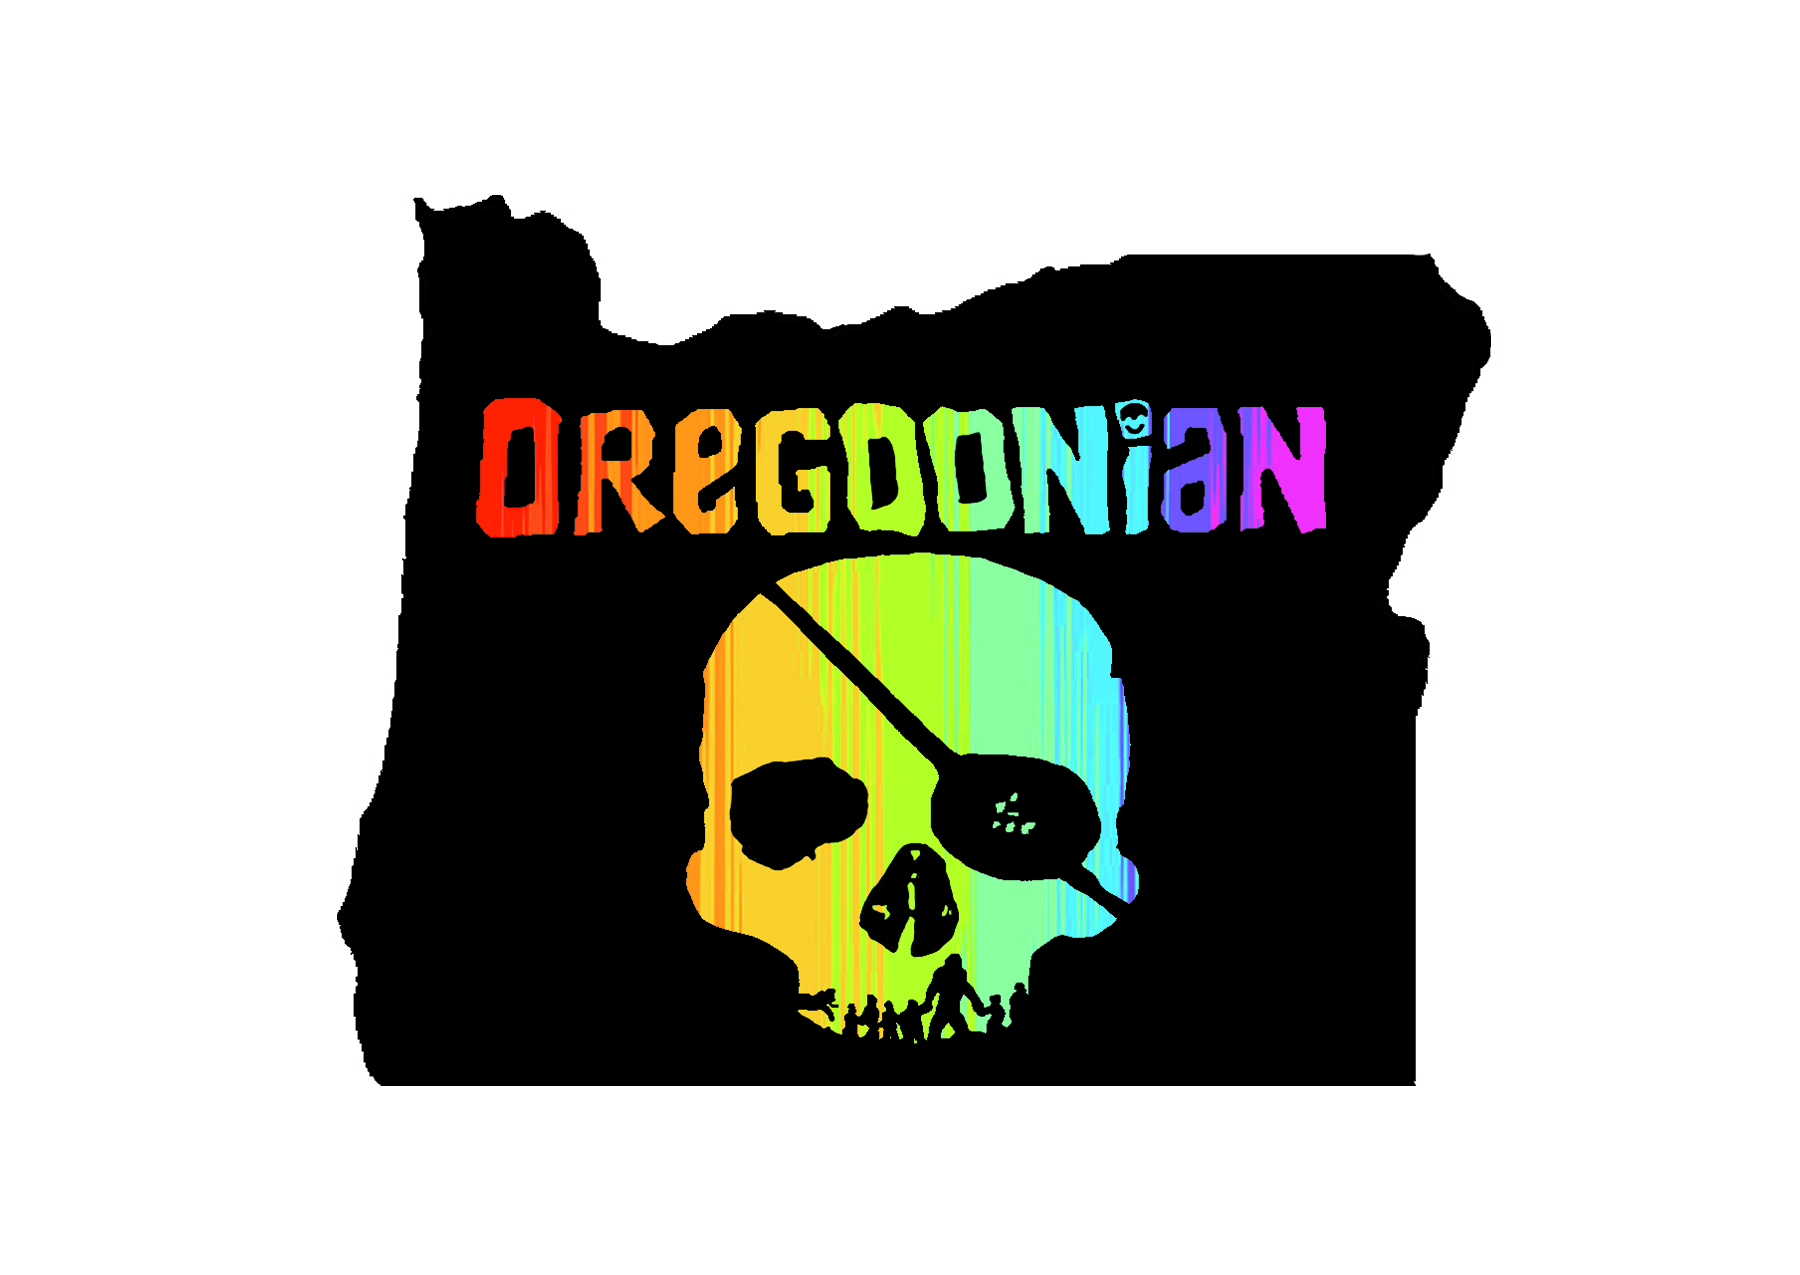 Oregoonian_Original_Rainbow_resized for website2